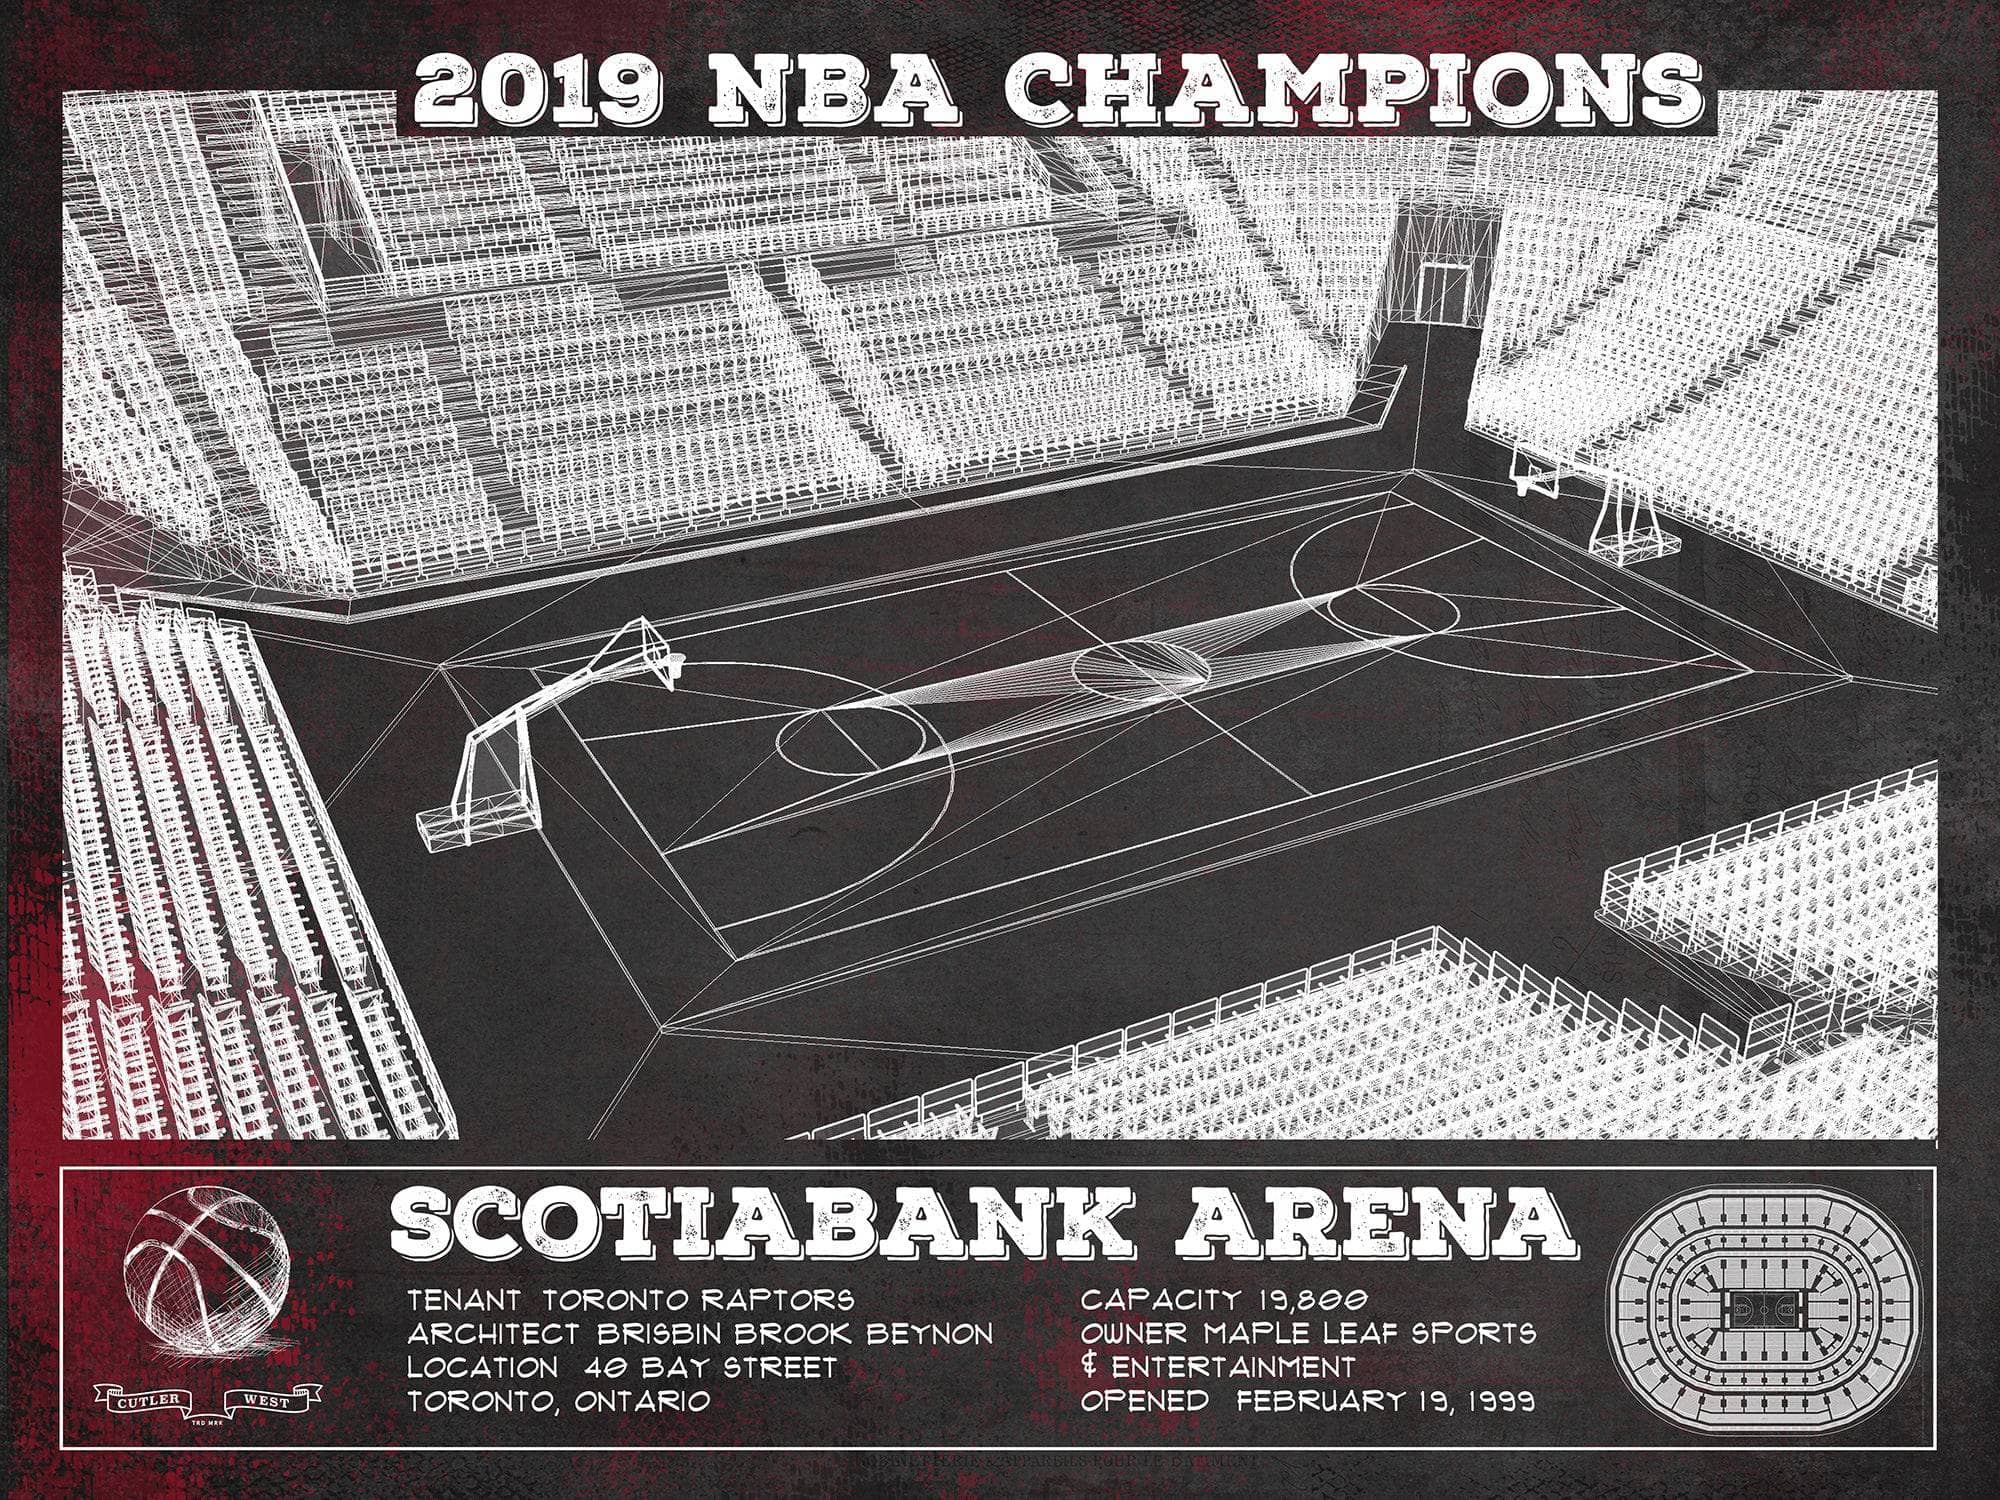 Cutler West Toronto Raptors 2019 NBA Champions - Scotiabank Arena Vintage Basketball Print